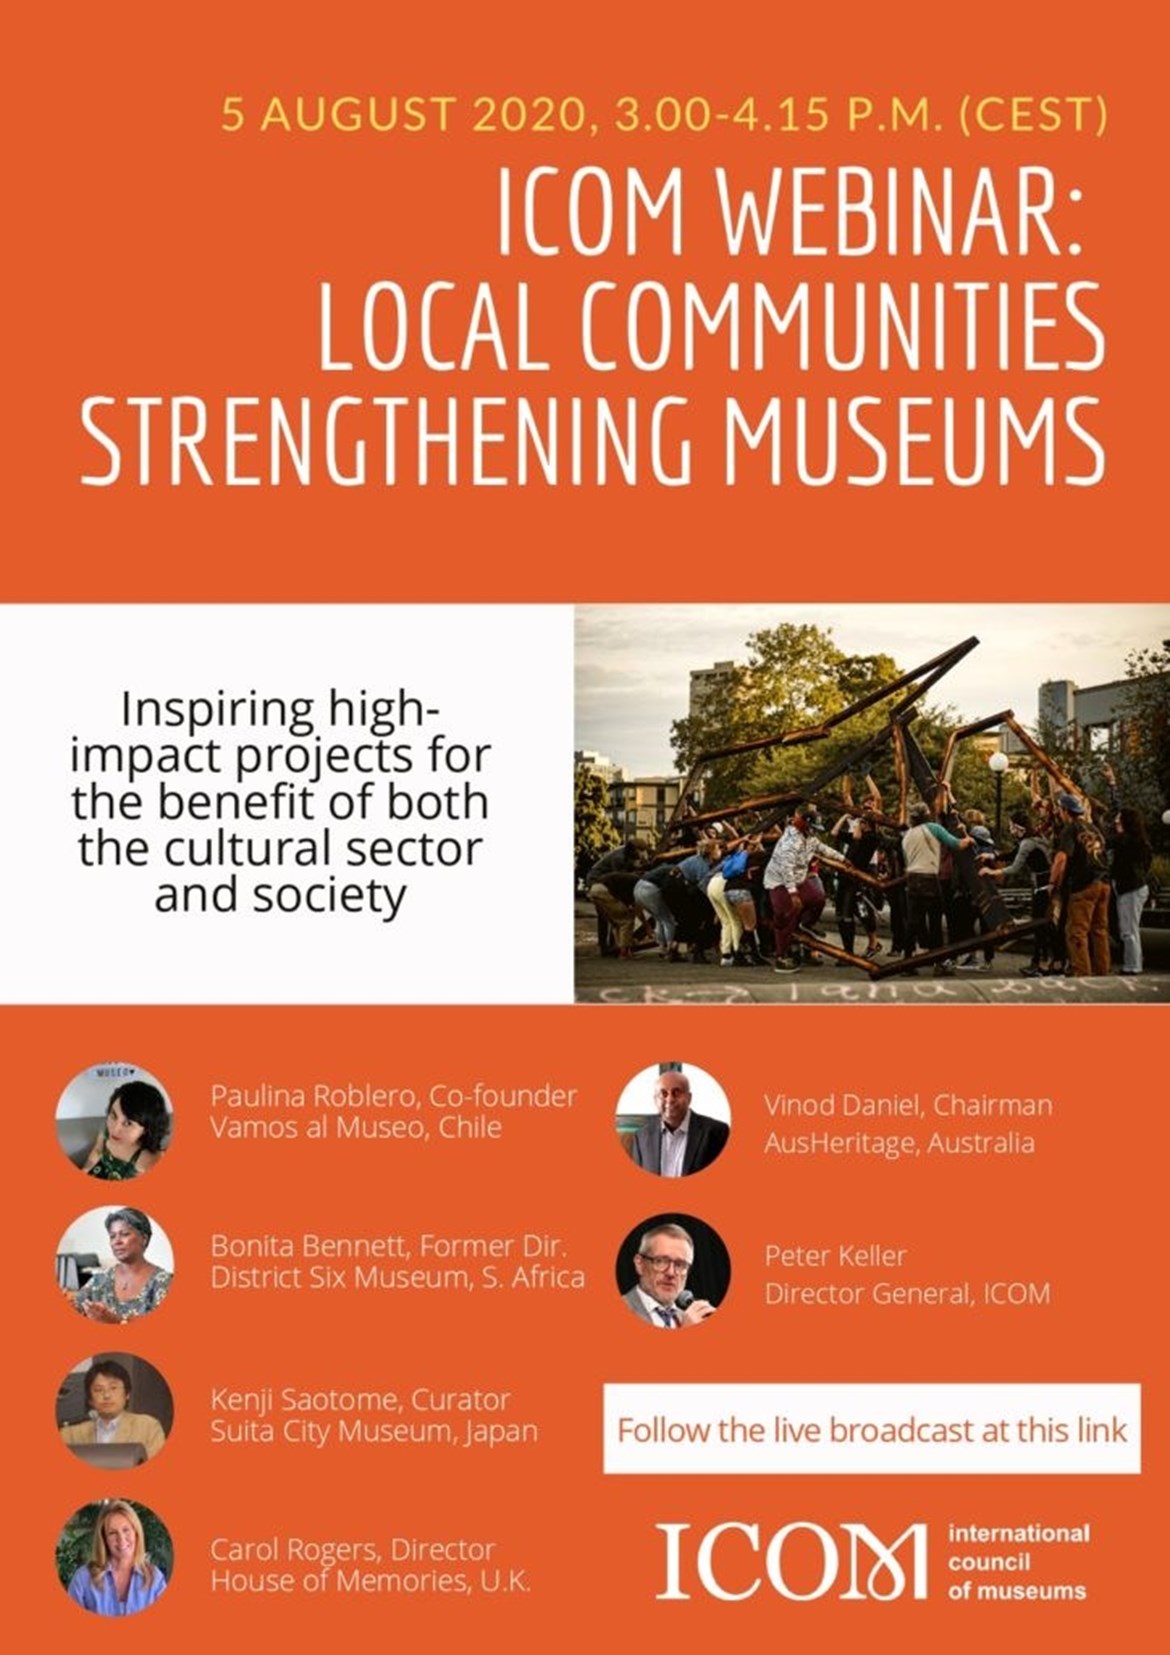 https://icom.museum/en/news/icom-webinar-local-communities-strengthening-museums/